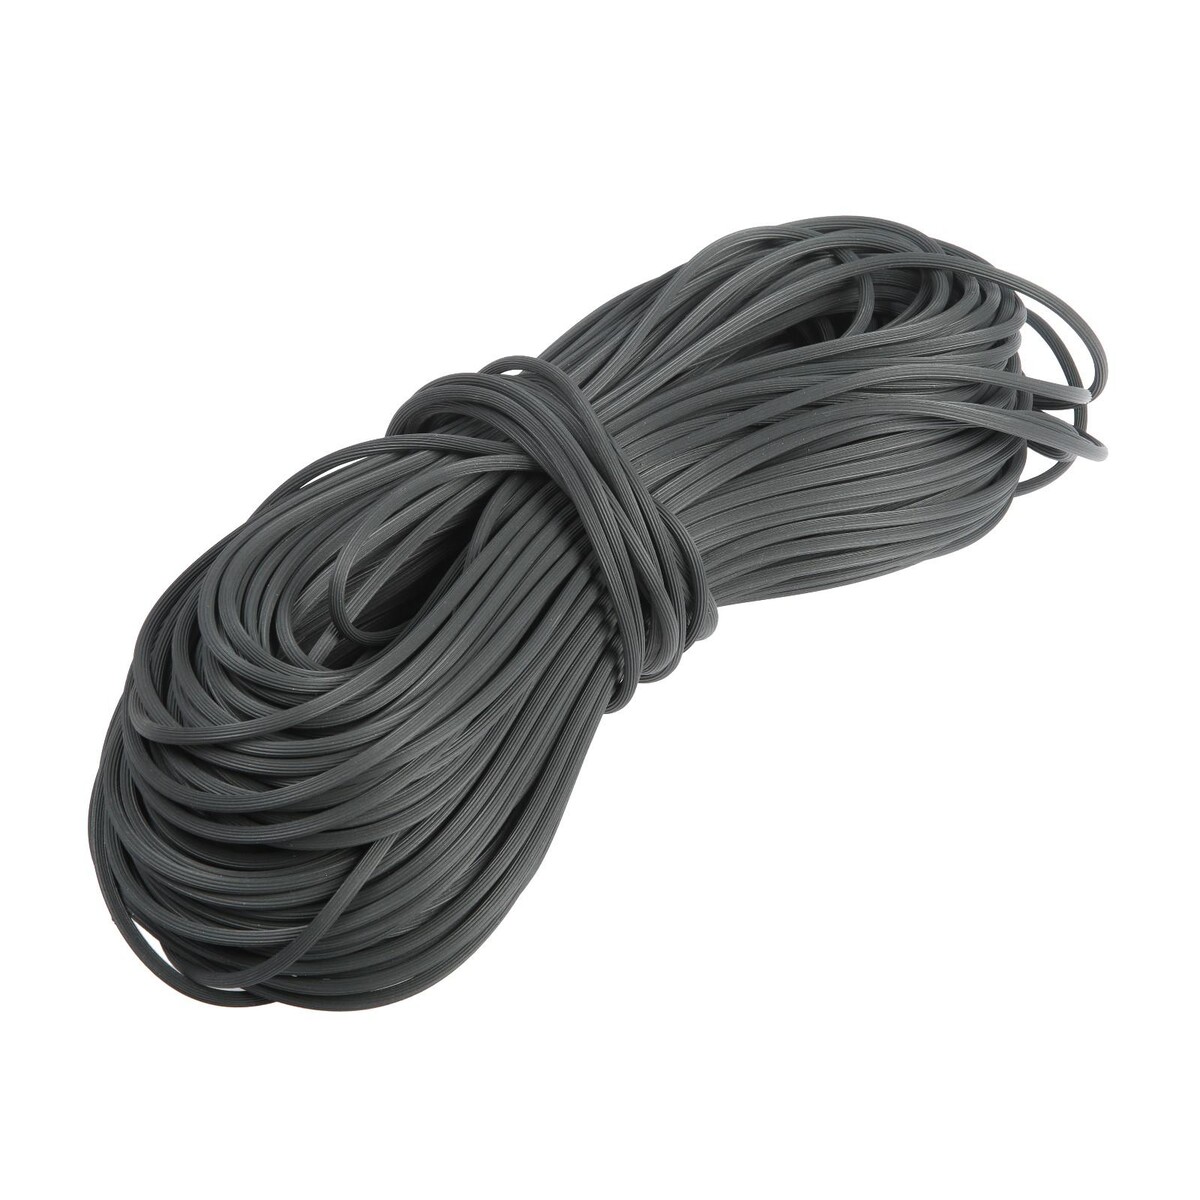 Резиновый шнур, серый, 100 м медбол резиновый 2 кг bronze gym bg fa mb2